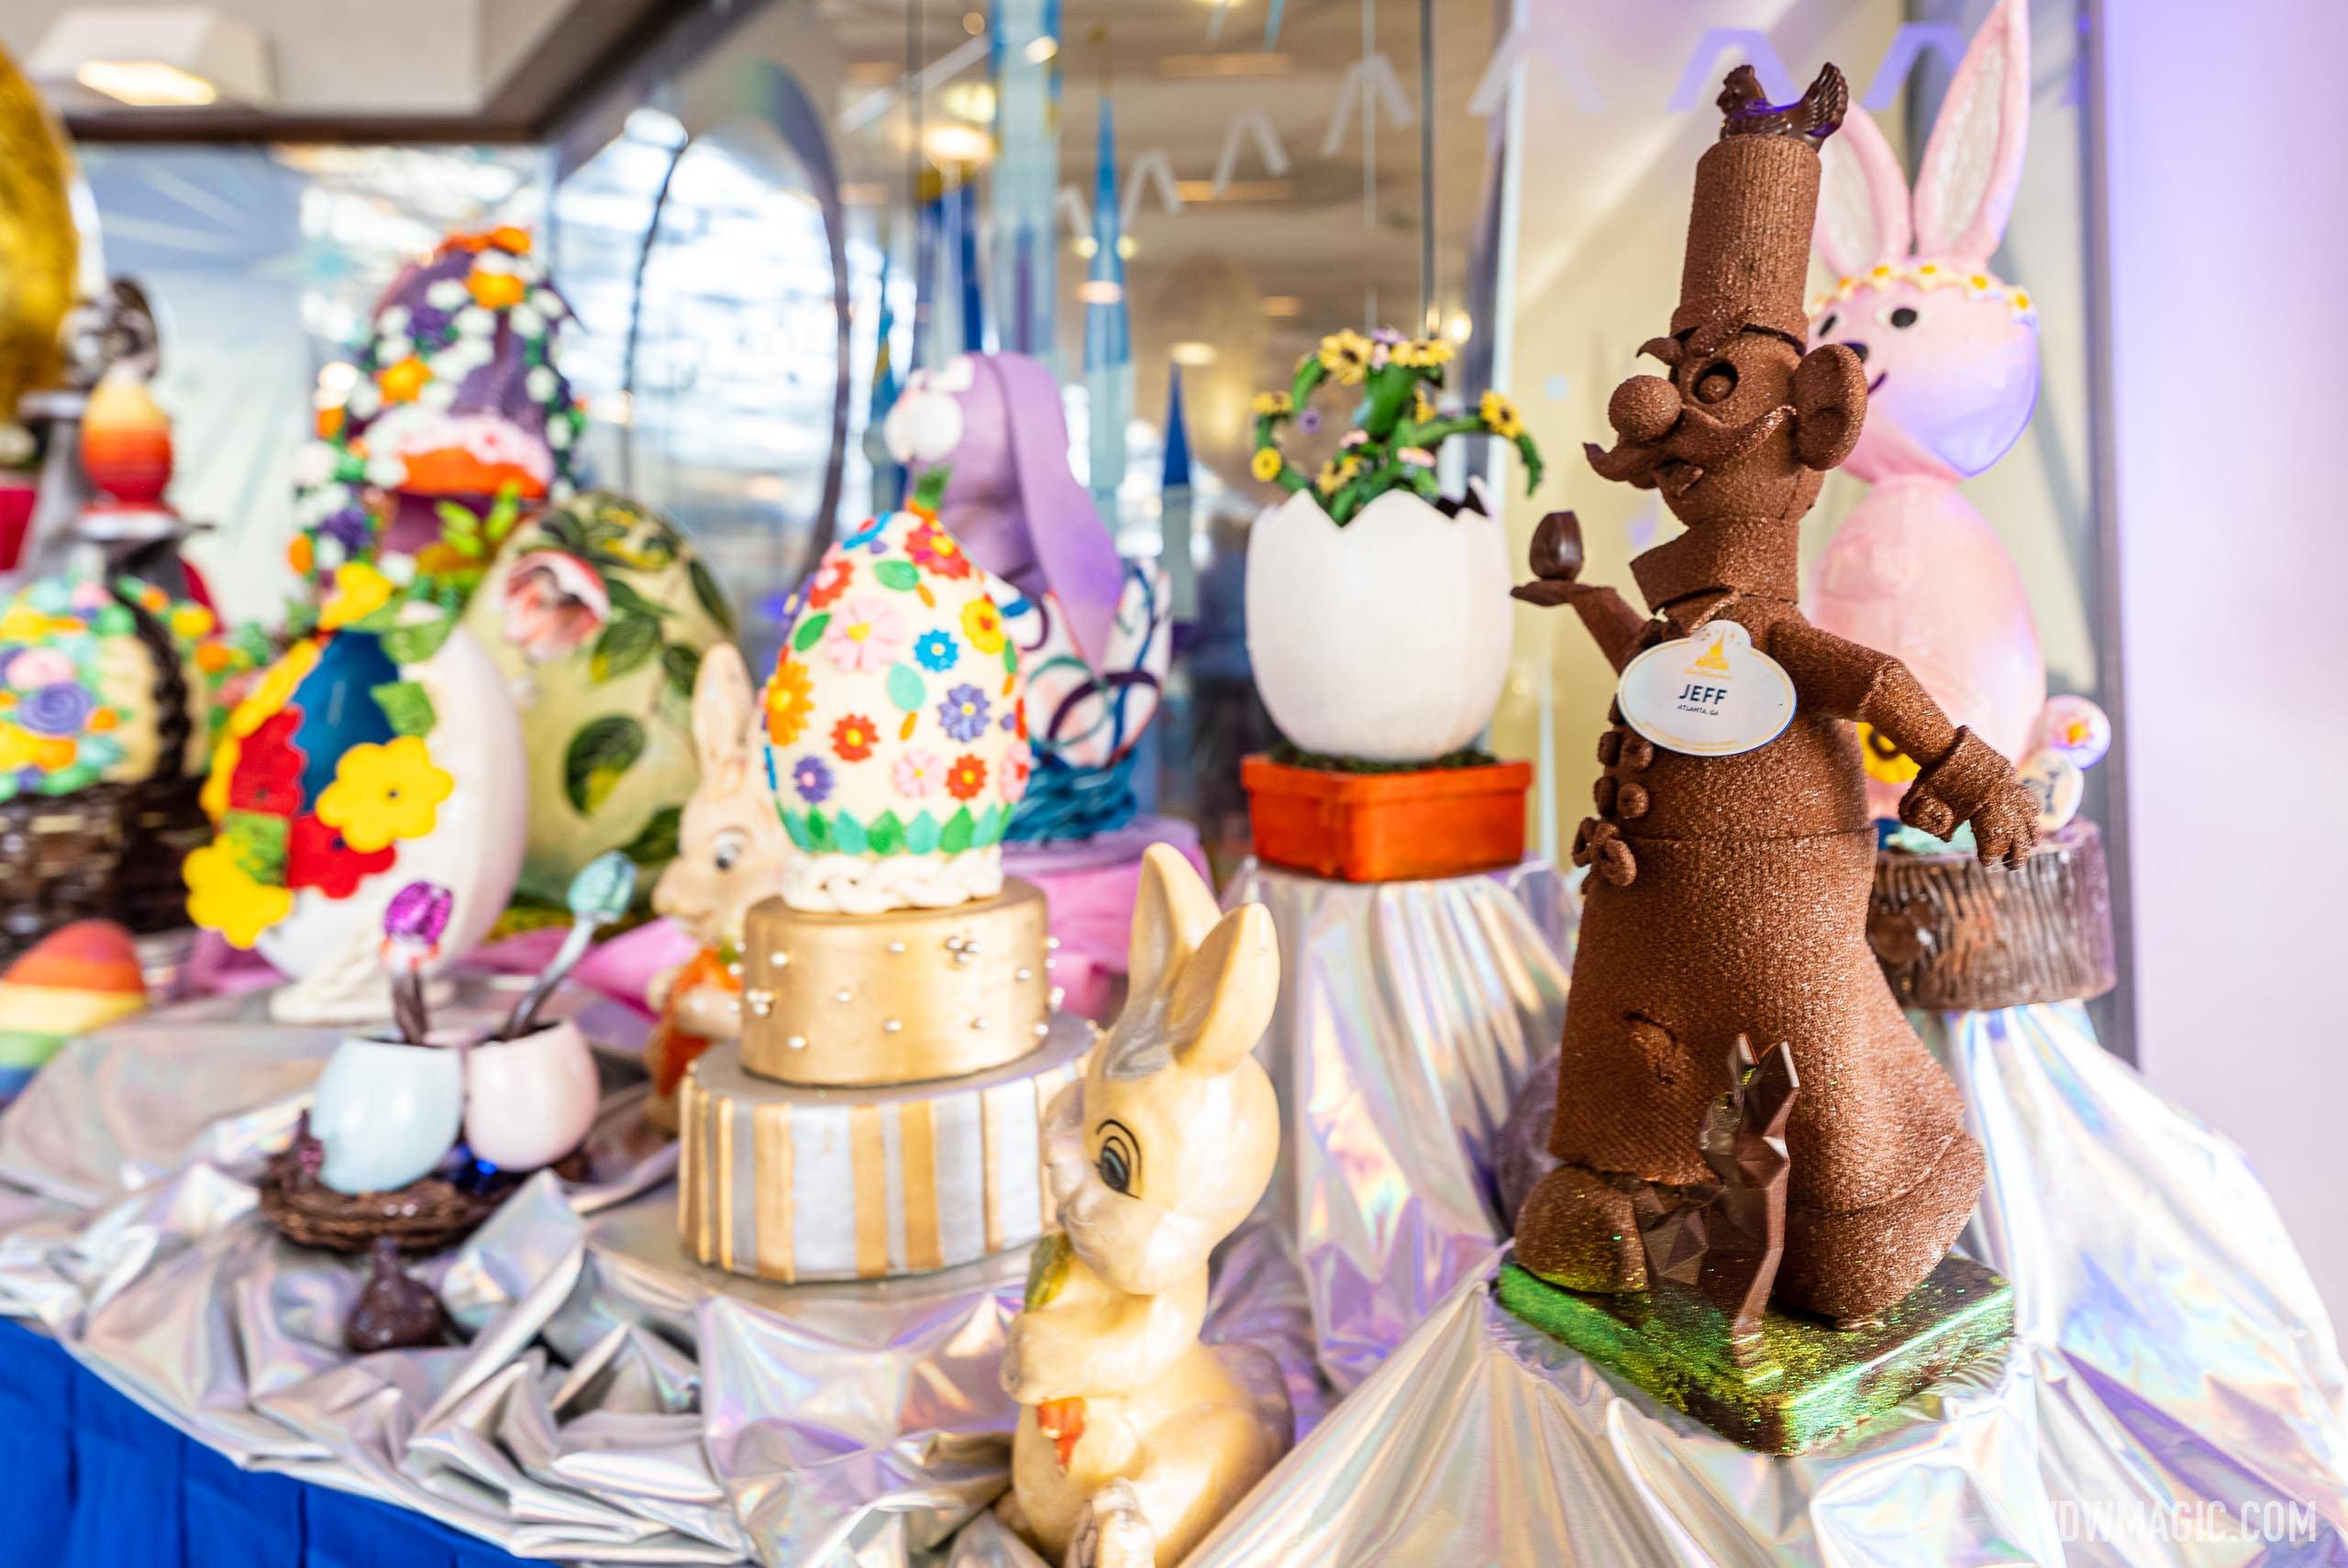 Disney's Contemporary Resort Easter egg display 2022